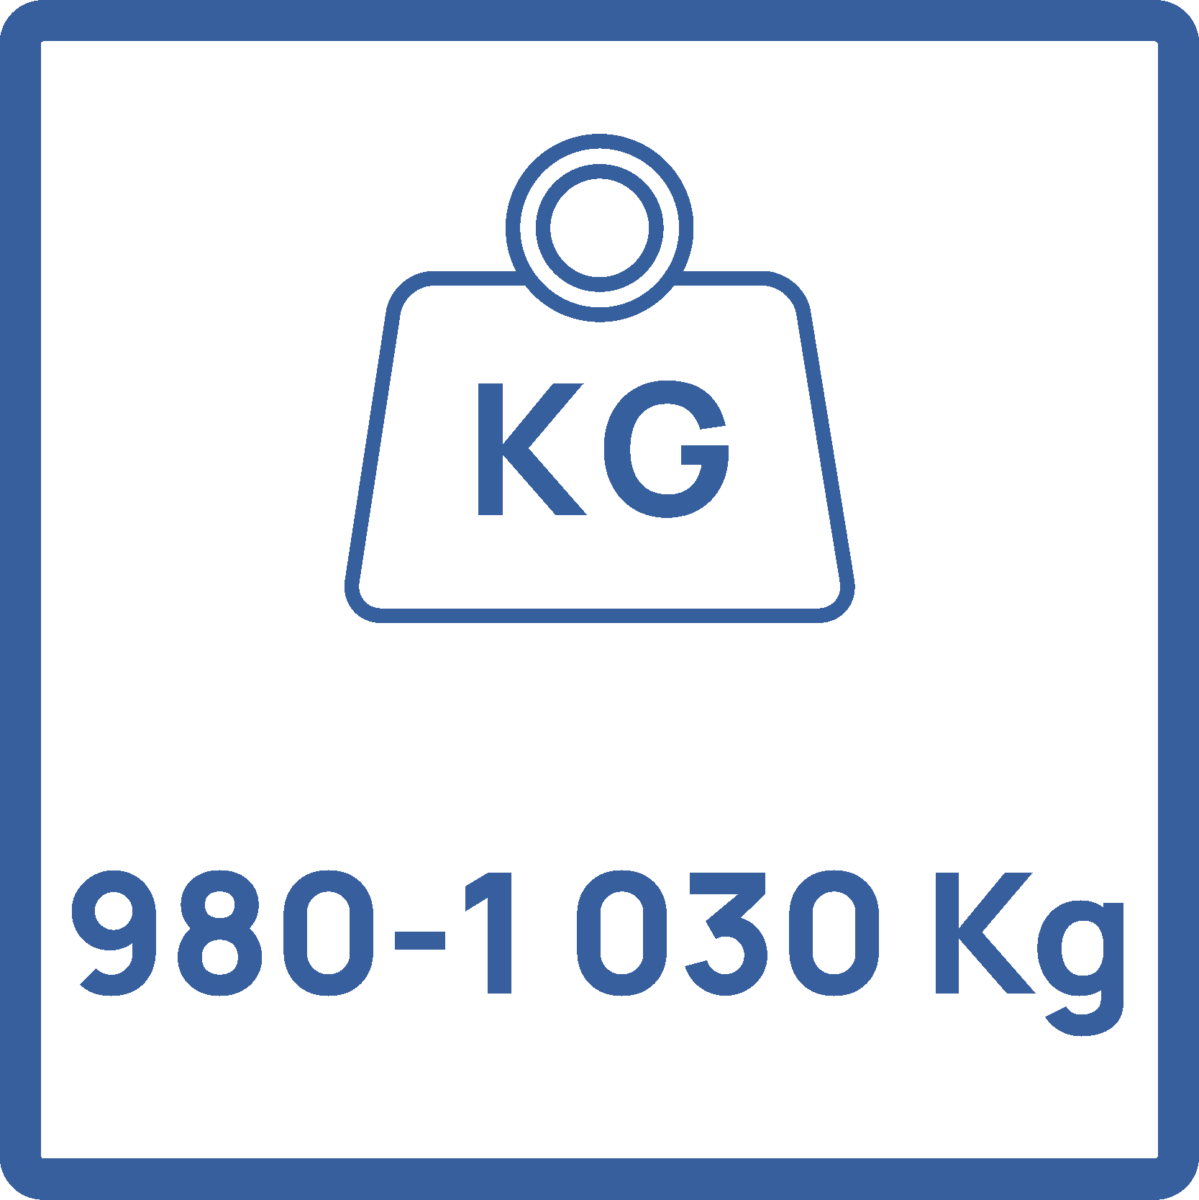 980-1 030 Kg